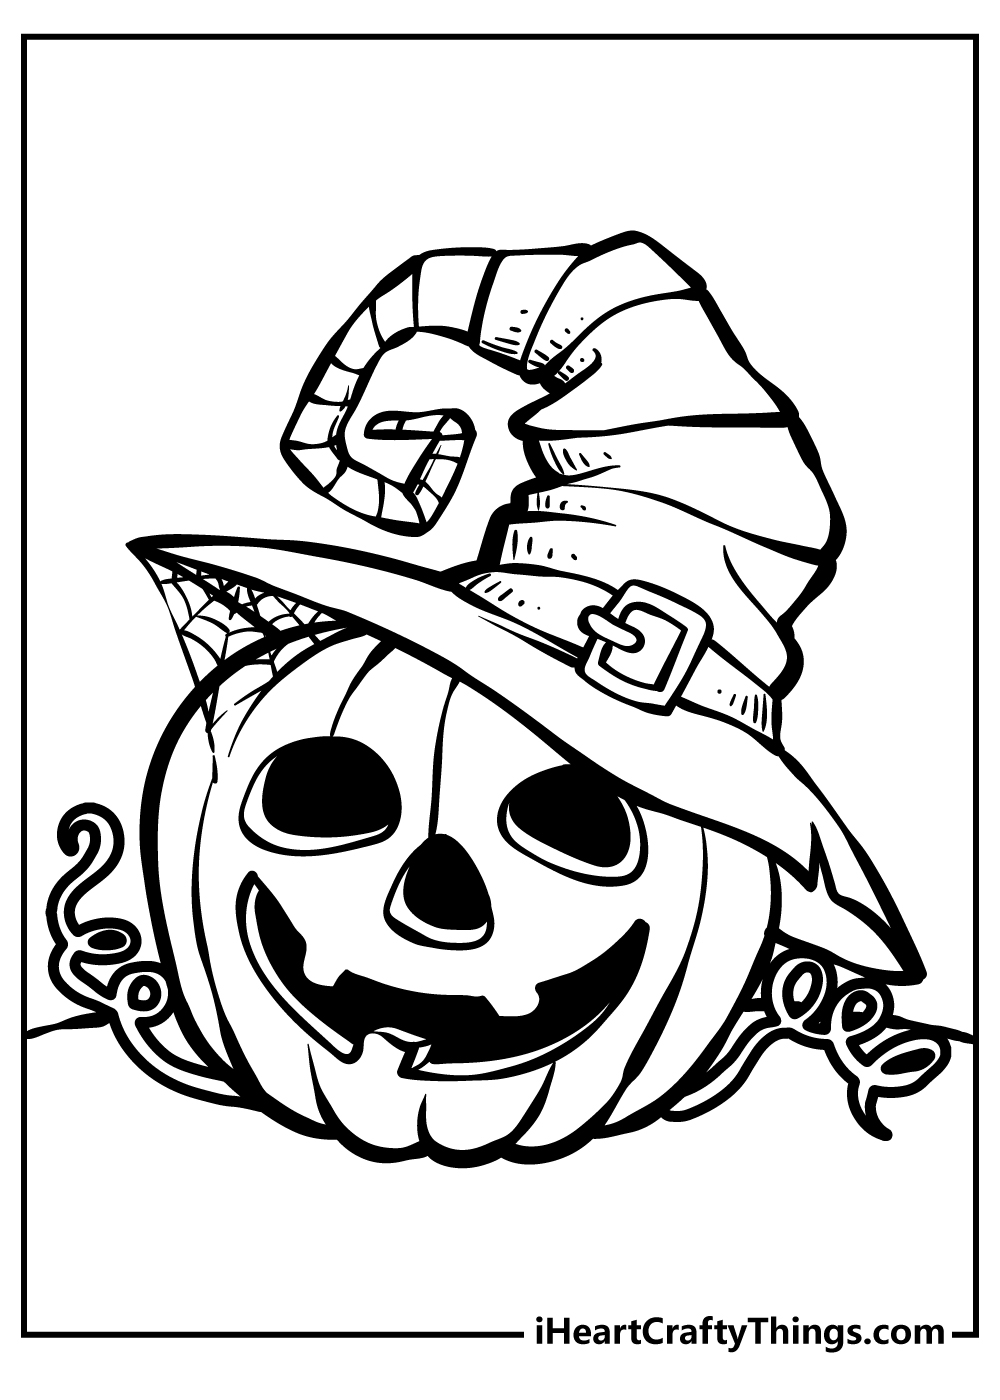 Halloween Coloring Original Sheet for children free download